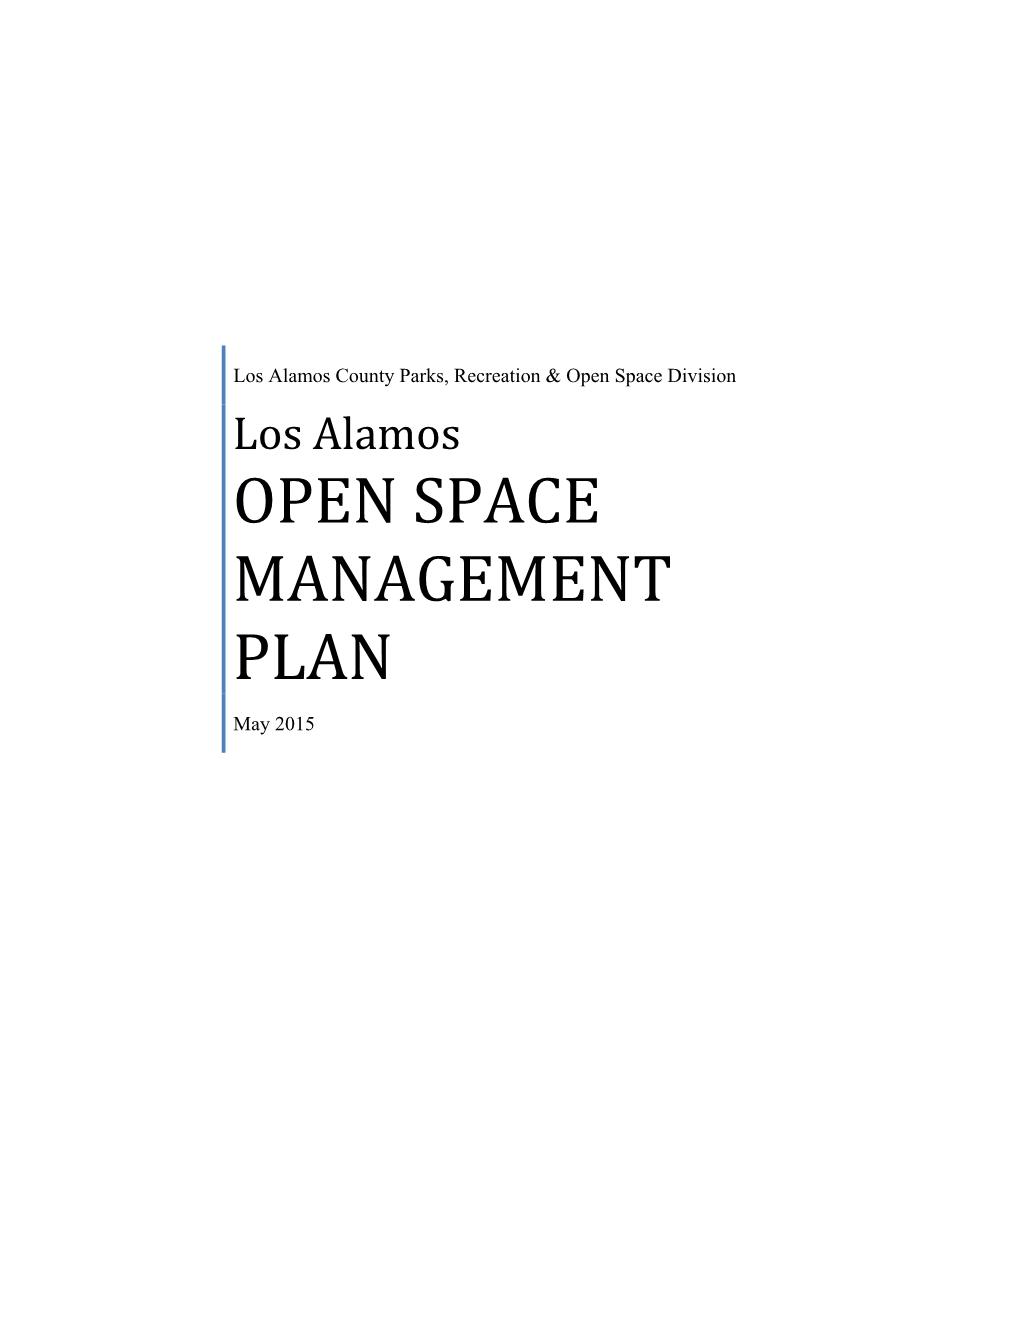 Open Space Management Plan